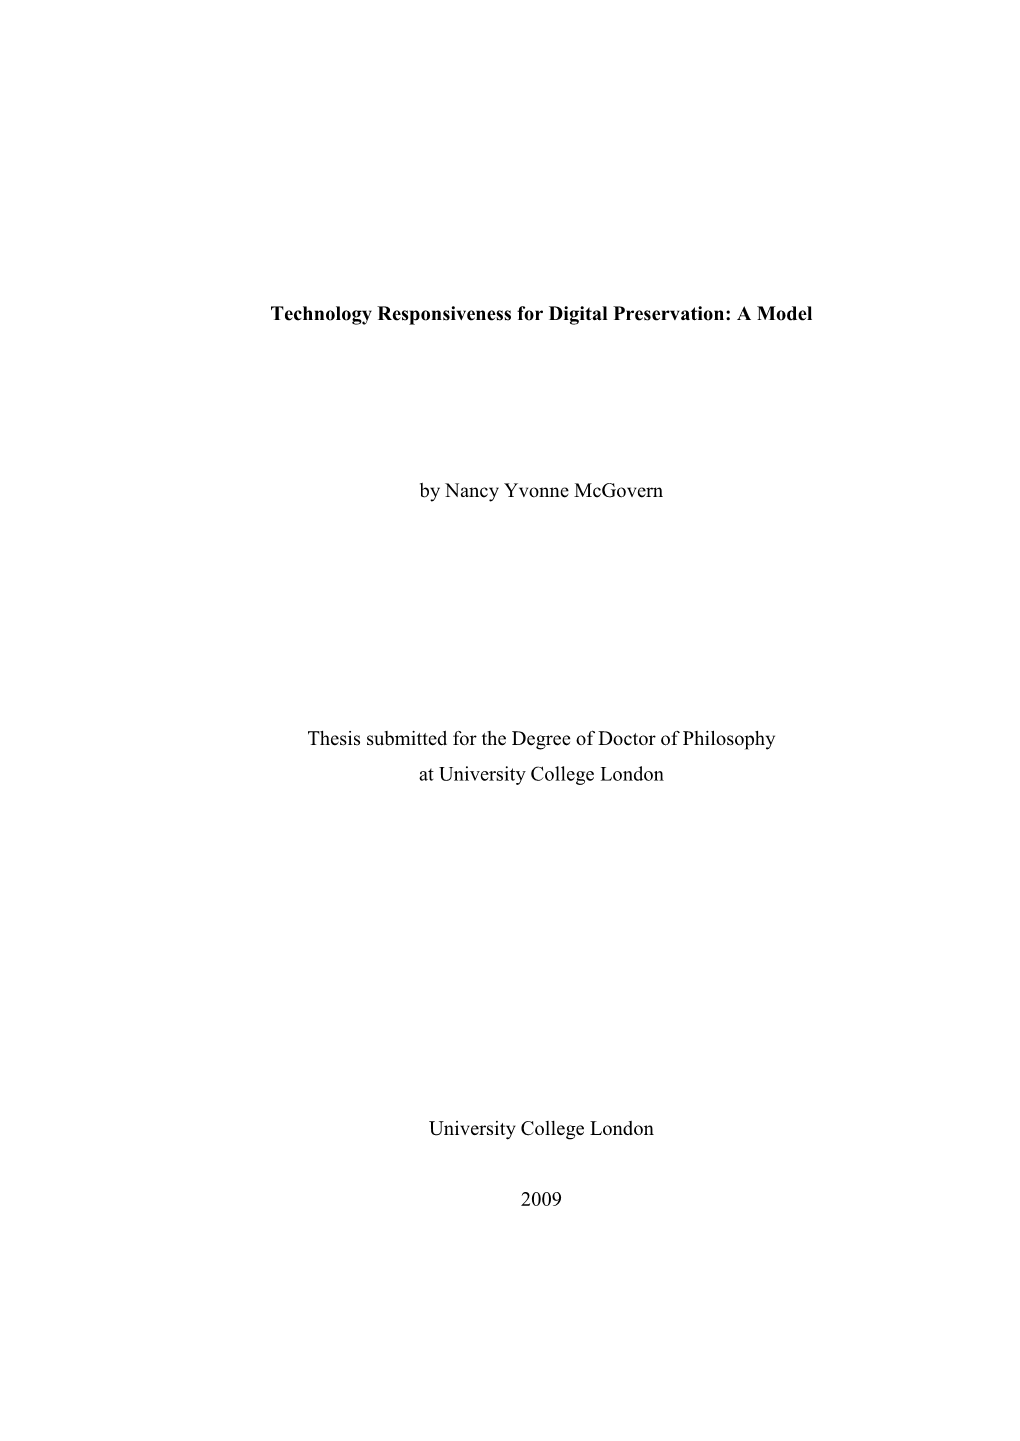 Technology Responsiveness for Digital Preservation: a Model